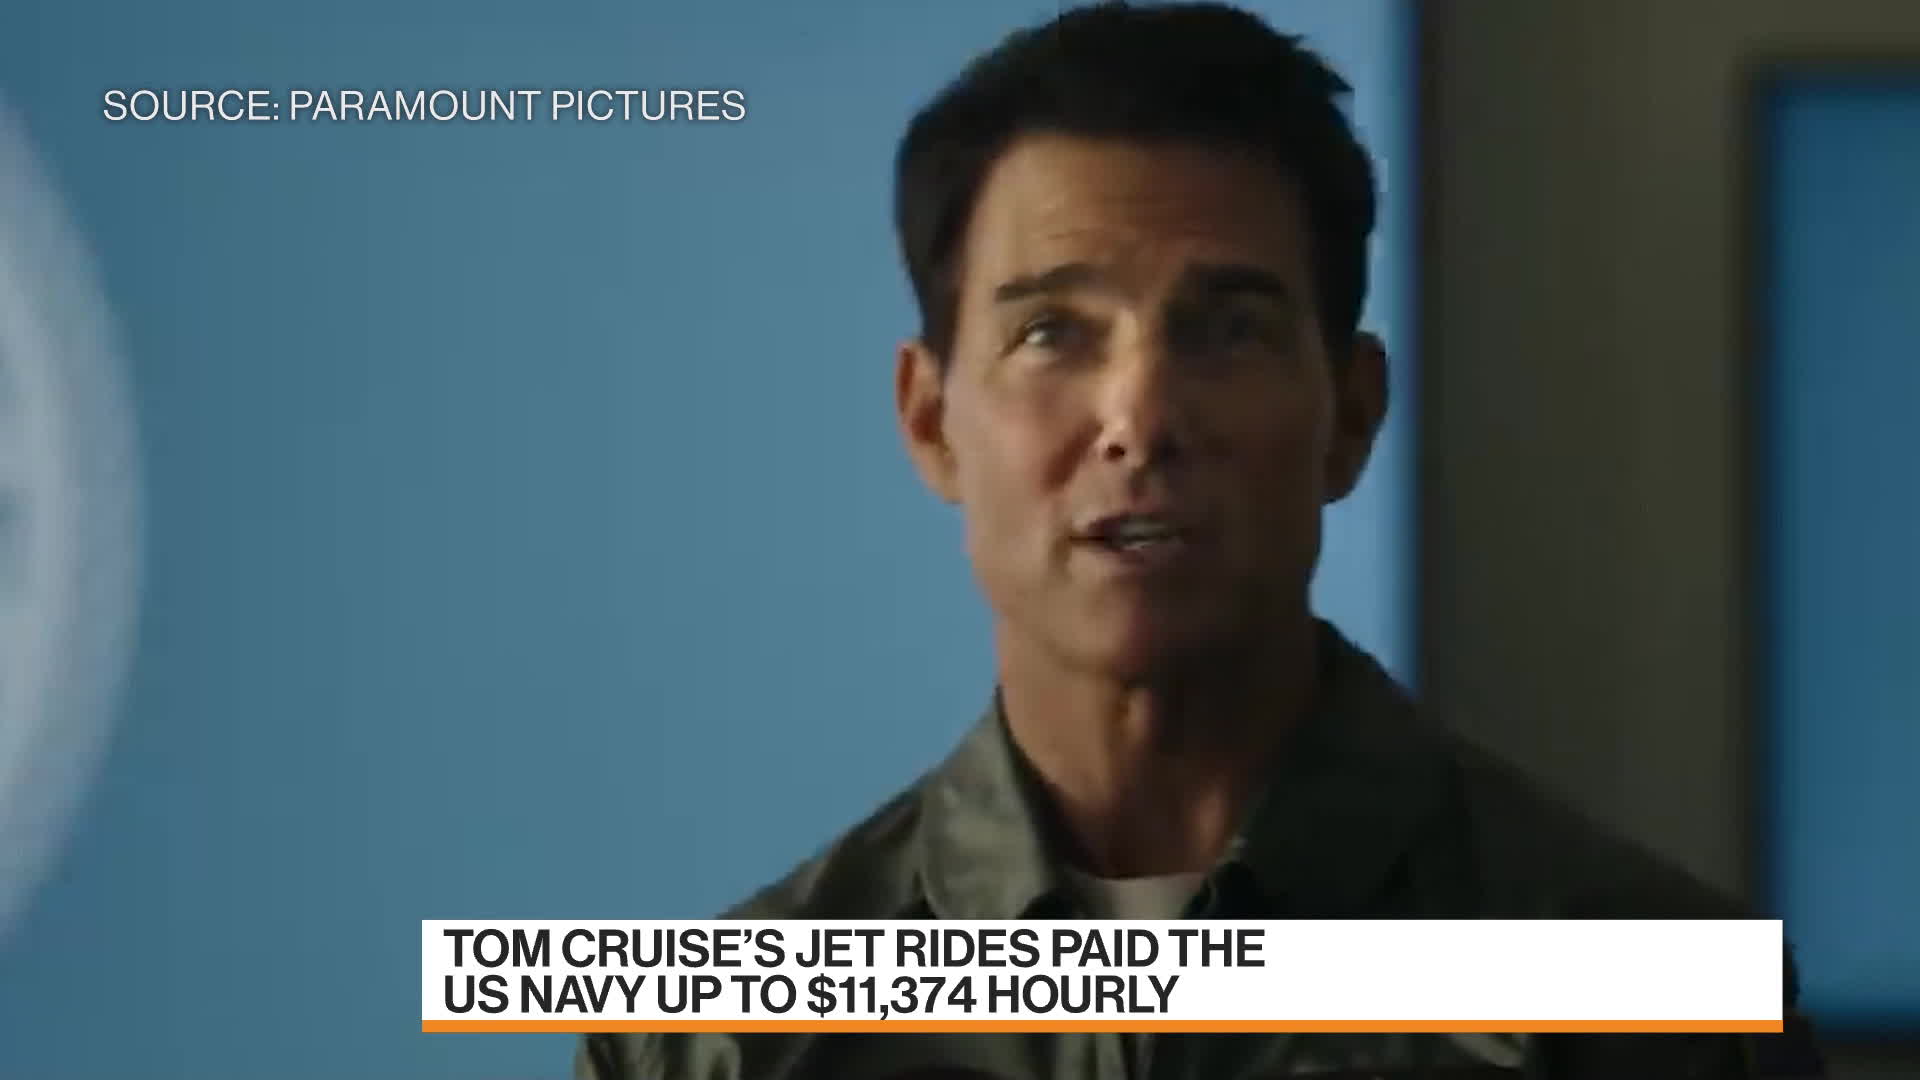 Top Gun: Maverick' Review: Smash Hit Tom Cruise Sequel Streaming